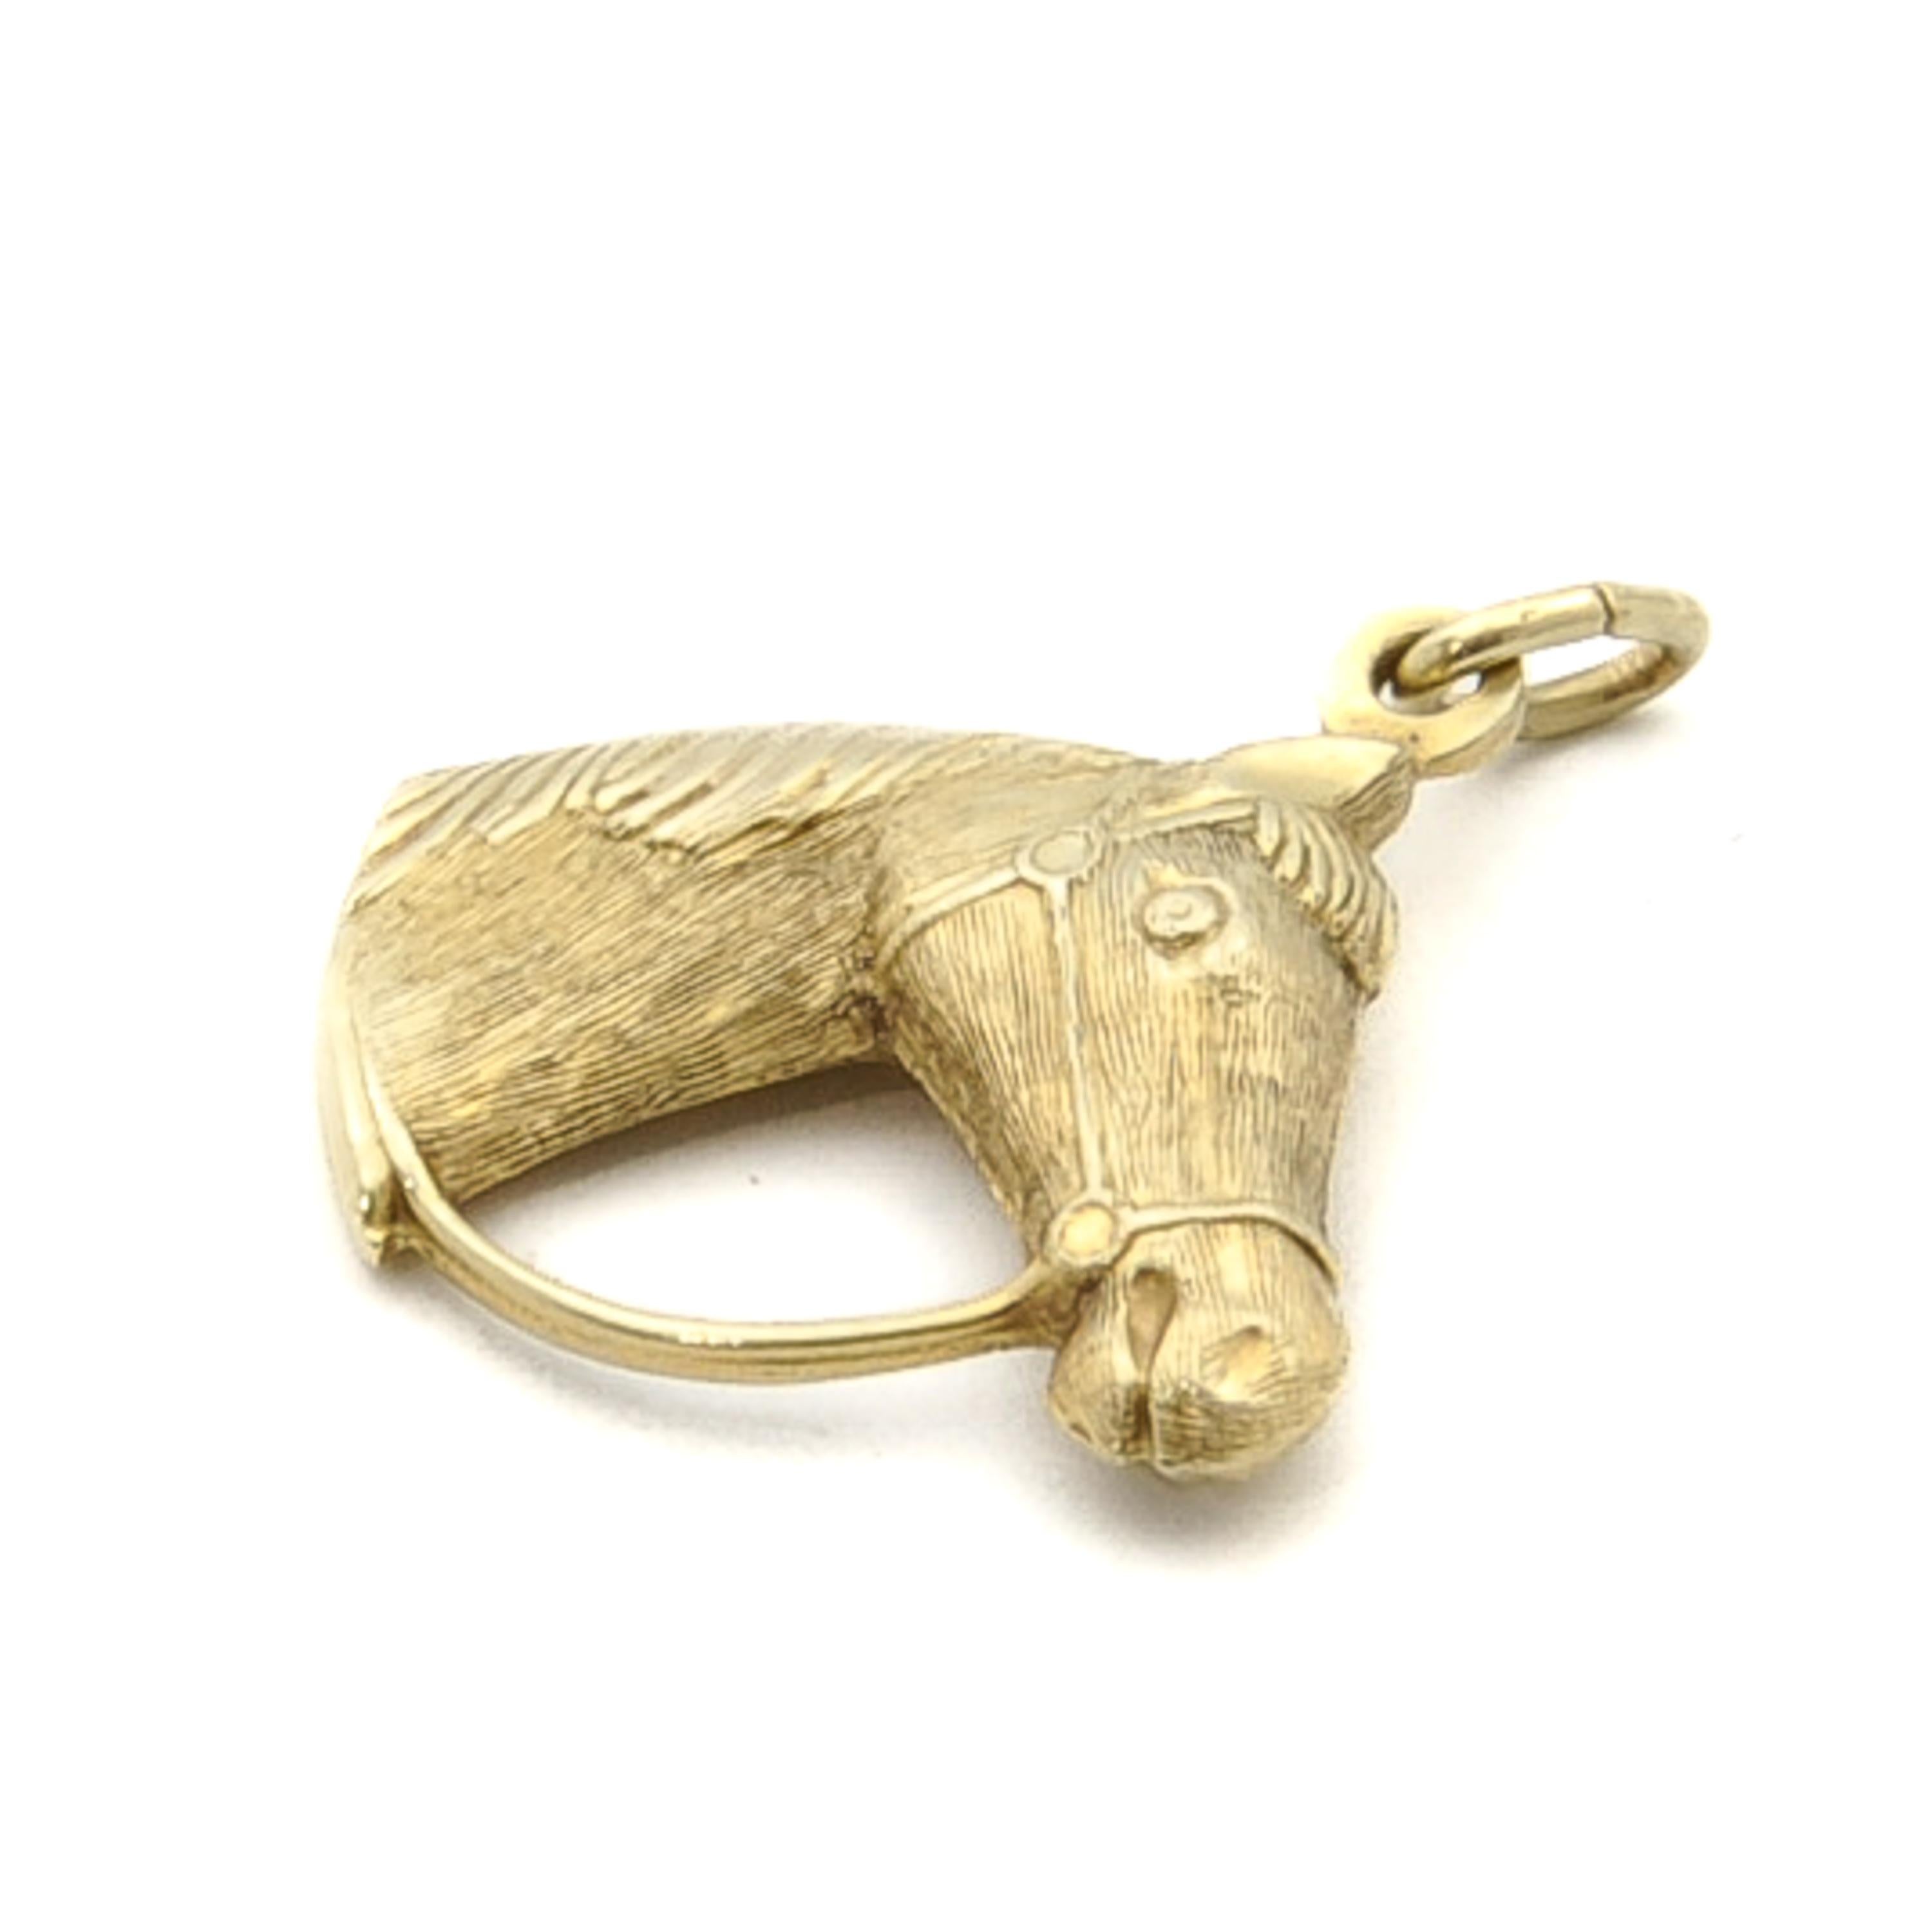 gold horse charm